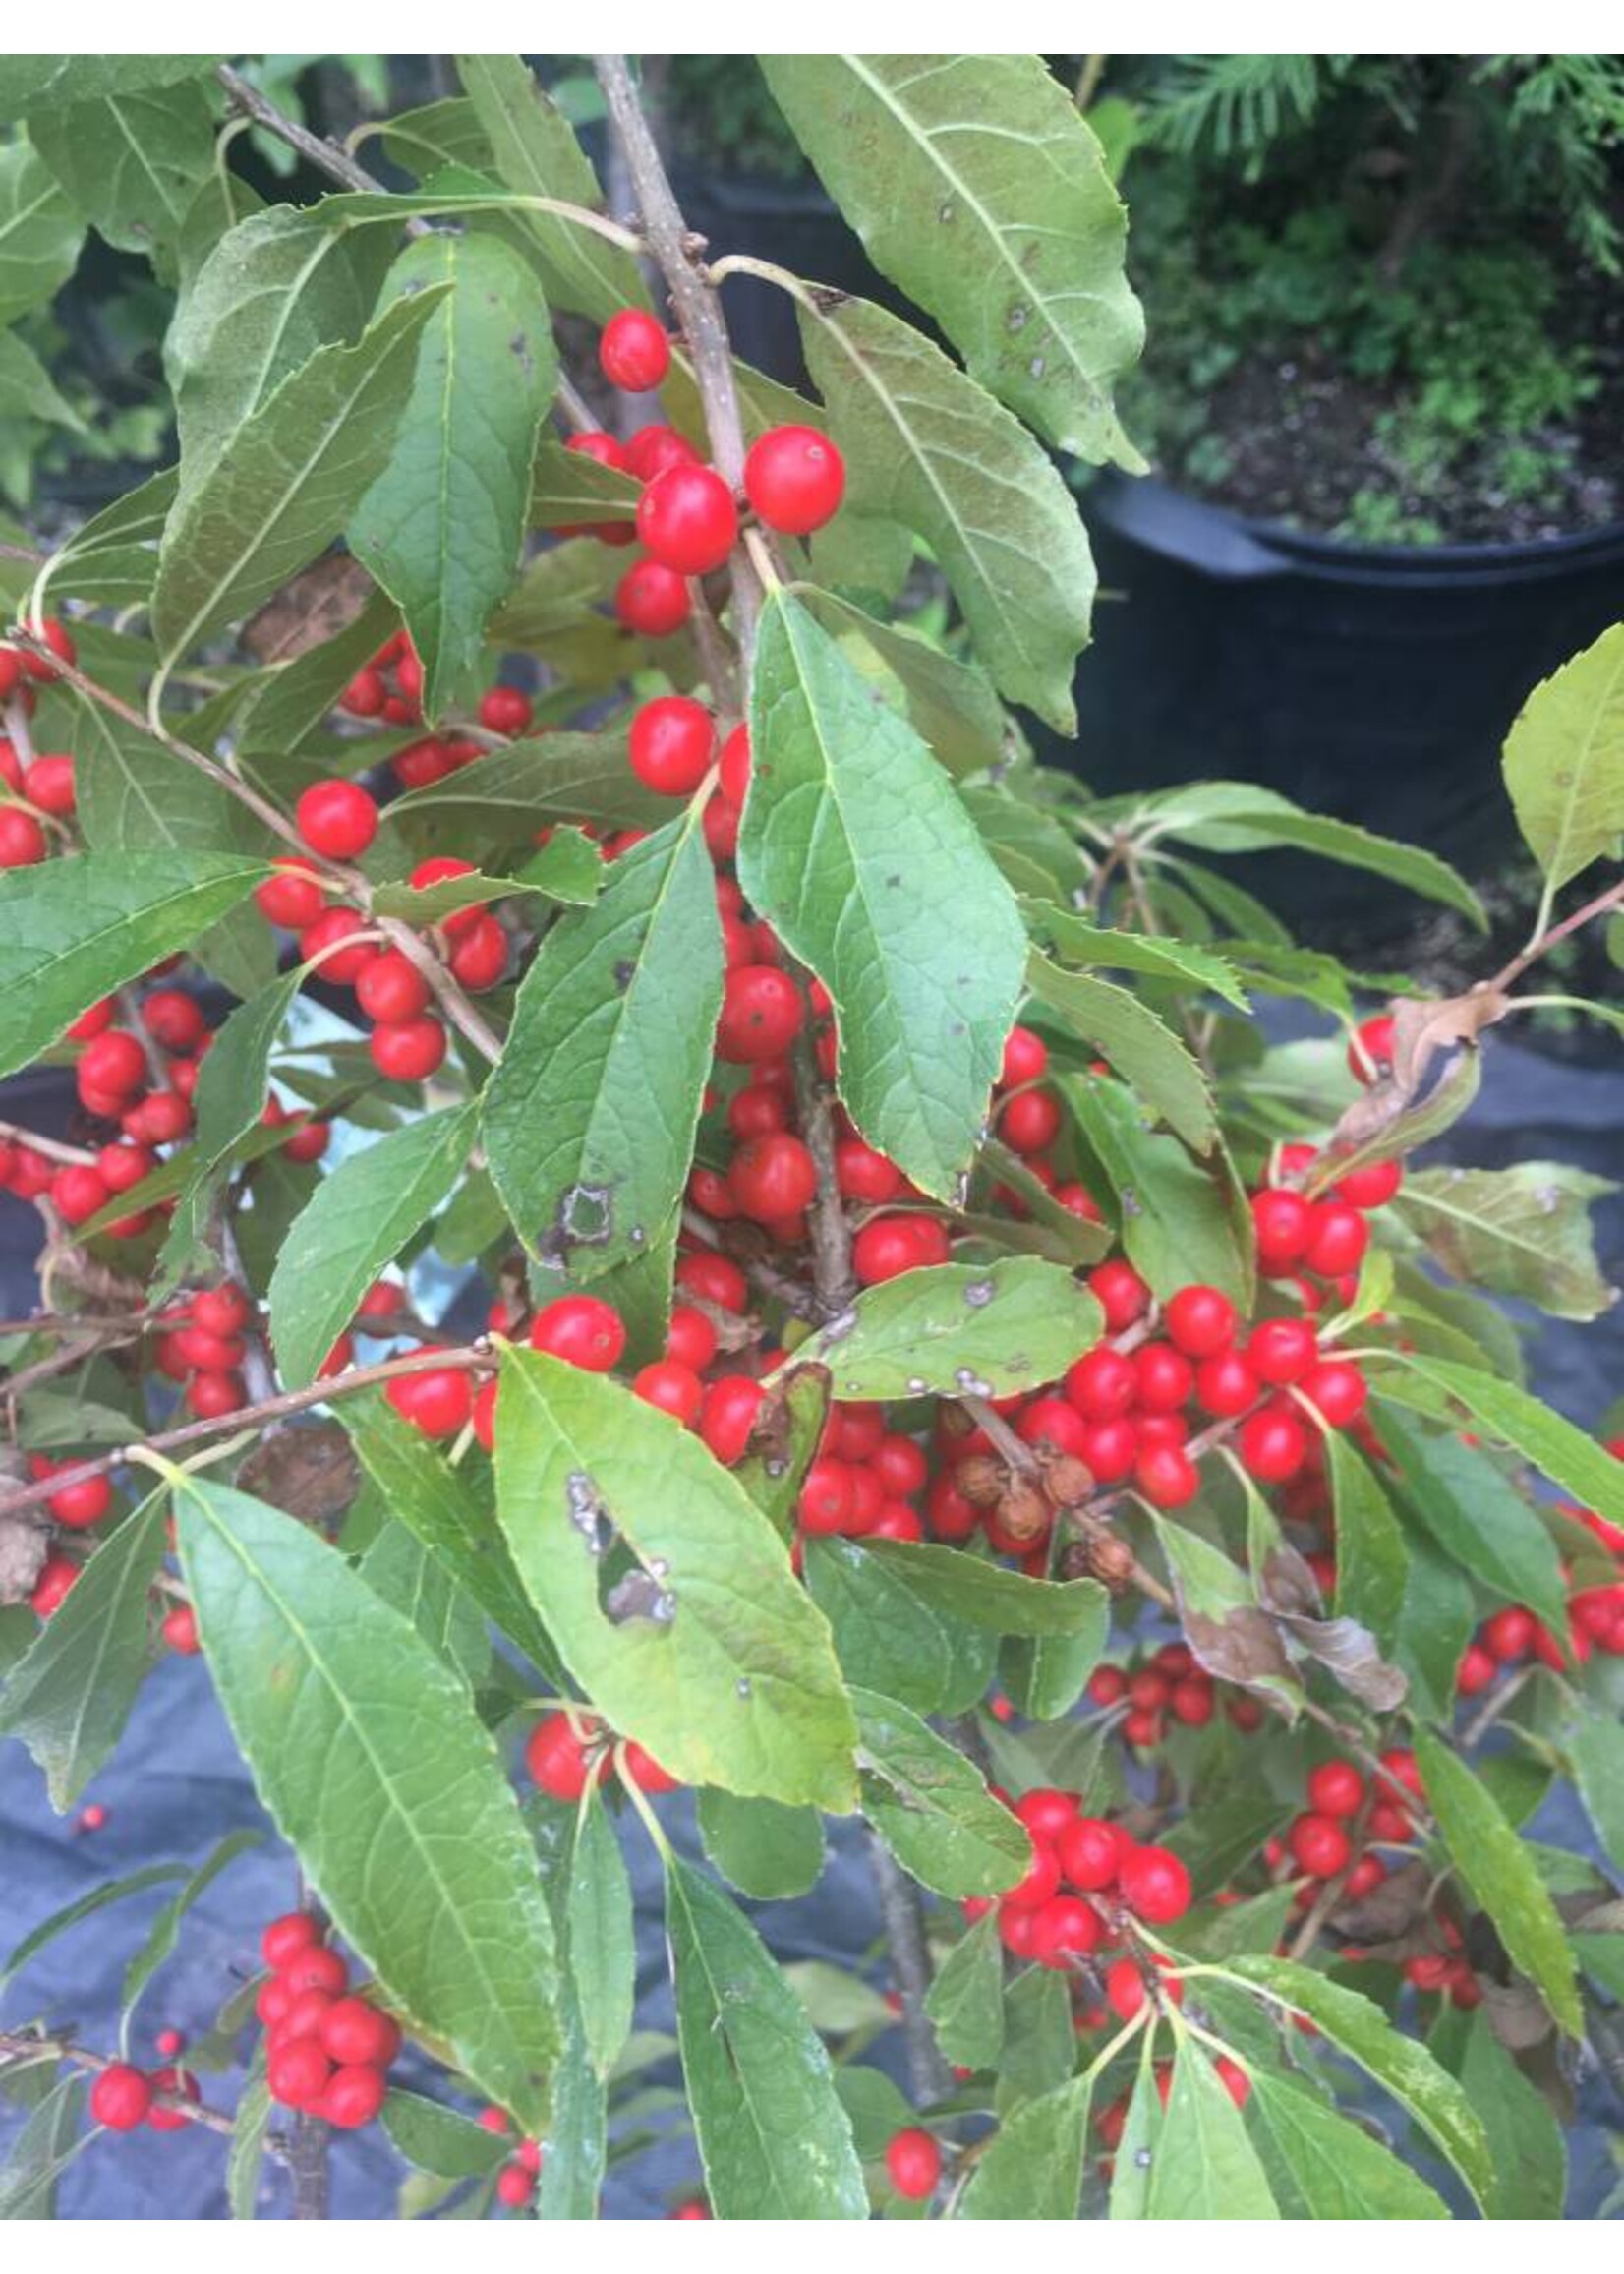 Rain Garden Ilex vert. FarrowBP Holly - Winterberry, Berry Poppins, #3